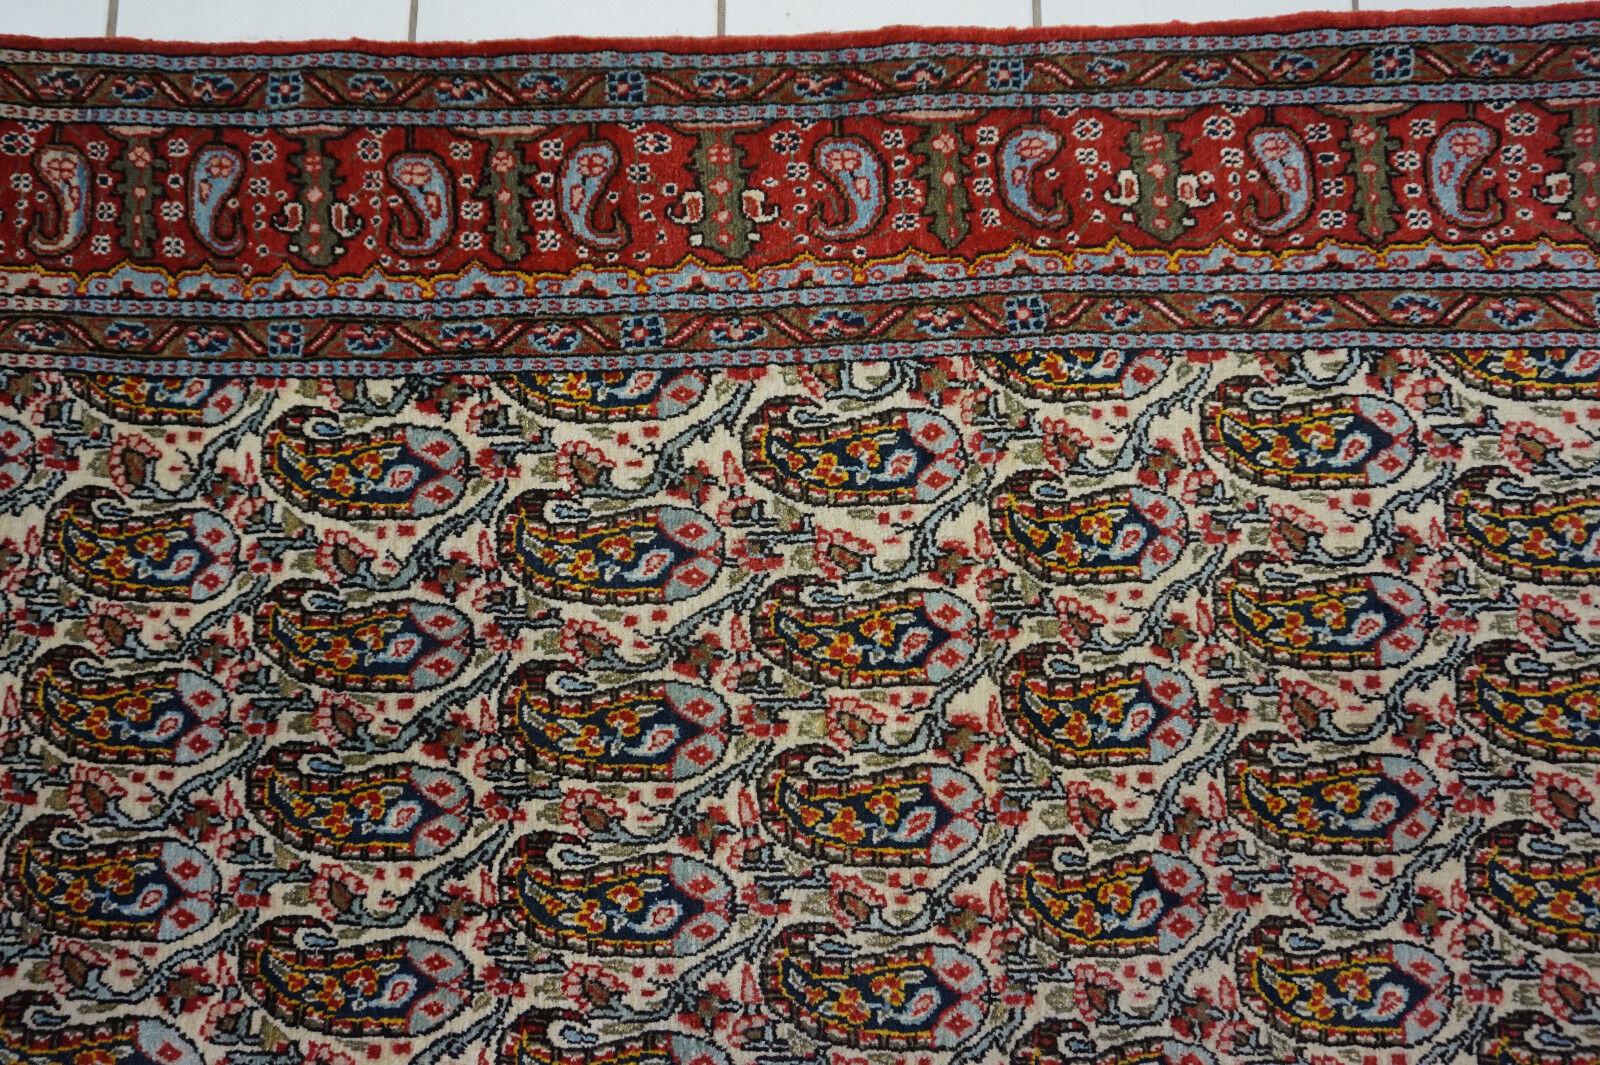 Handmade Vintage Persian Style Qum Rug 4.3' x 6.9', 1960s - 1D47 1